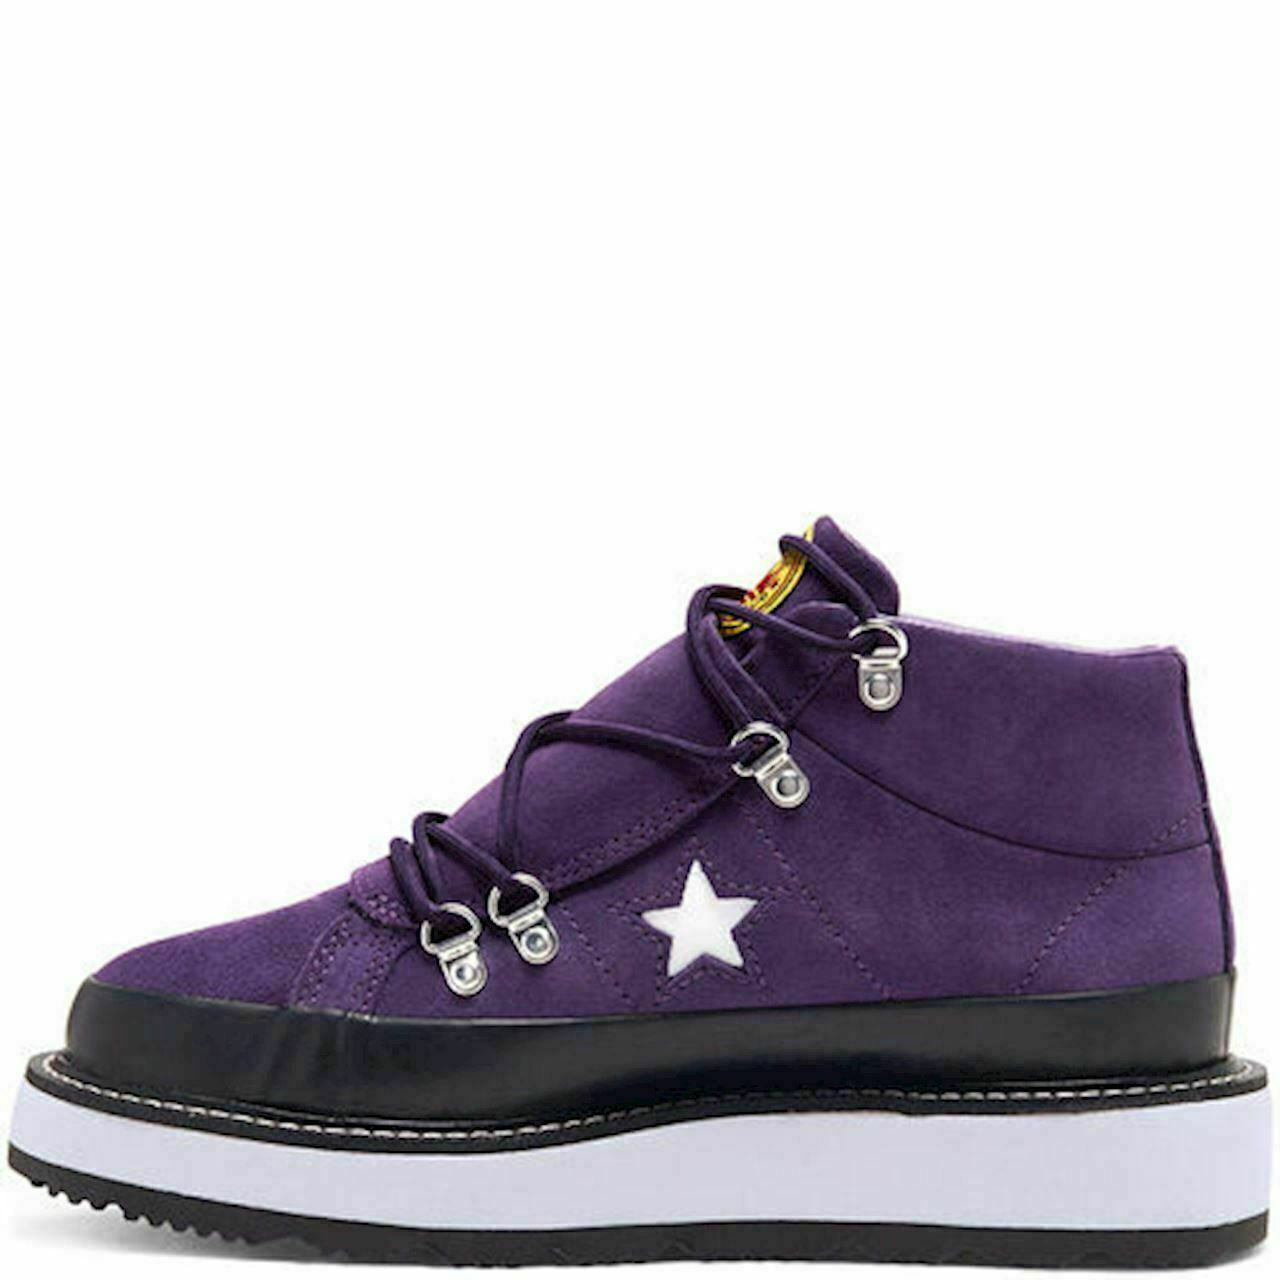 Converse One Boot Women's Purple 566162C Walmart.com